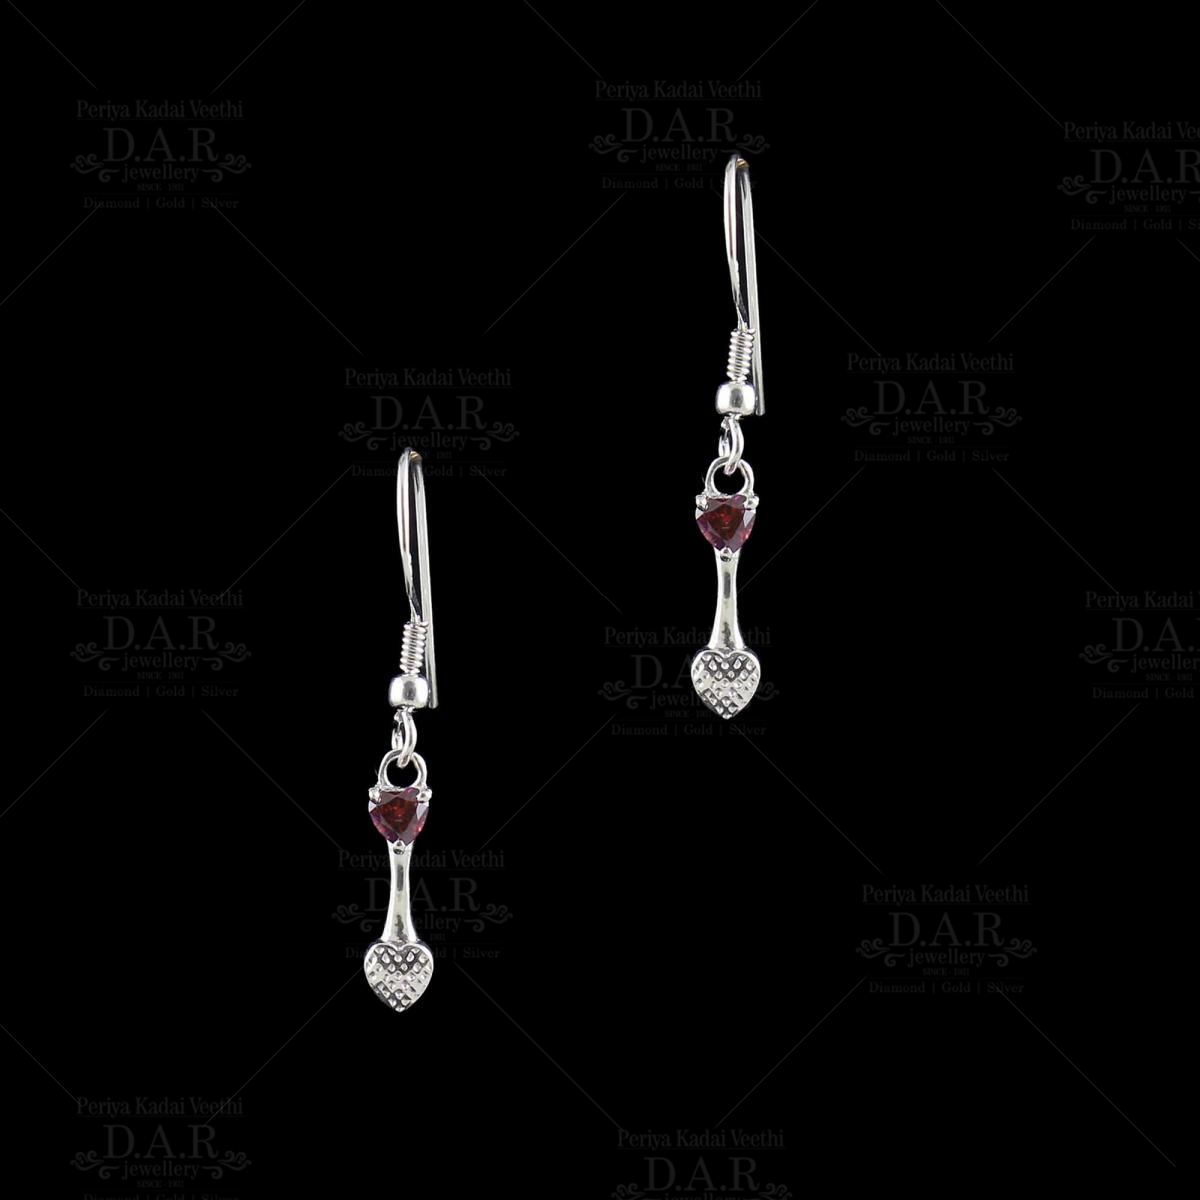 18k White Gold Filled Earrings made w Swarovski Crystal Red Garnet Gemstone  | eBay